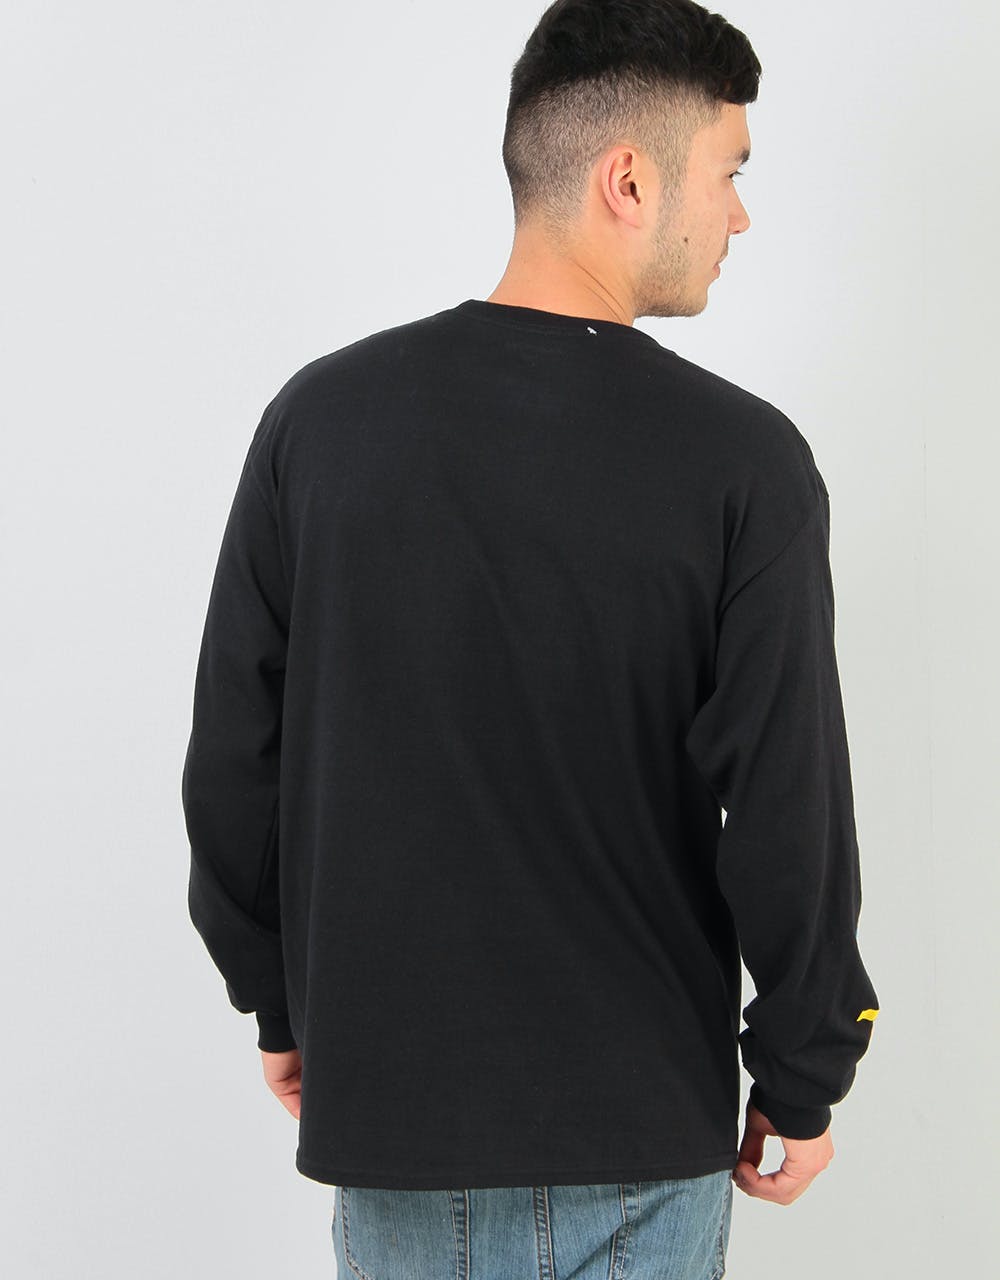 Colourblind Logo Long Sleeve T-Shirt - Black